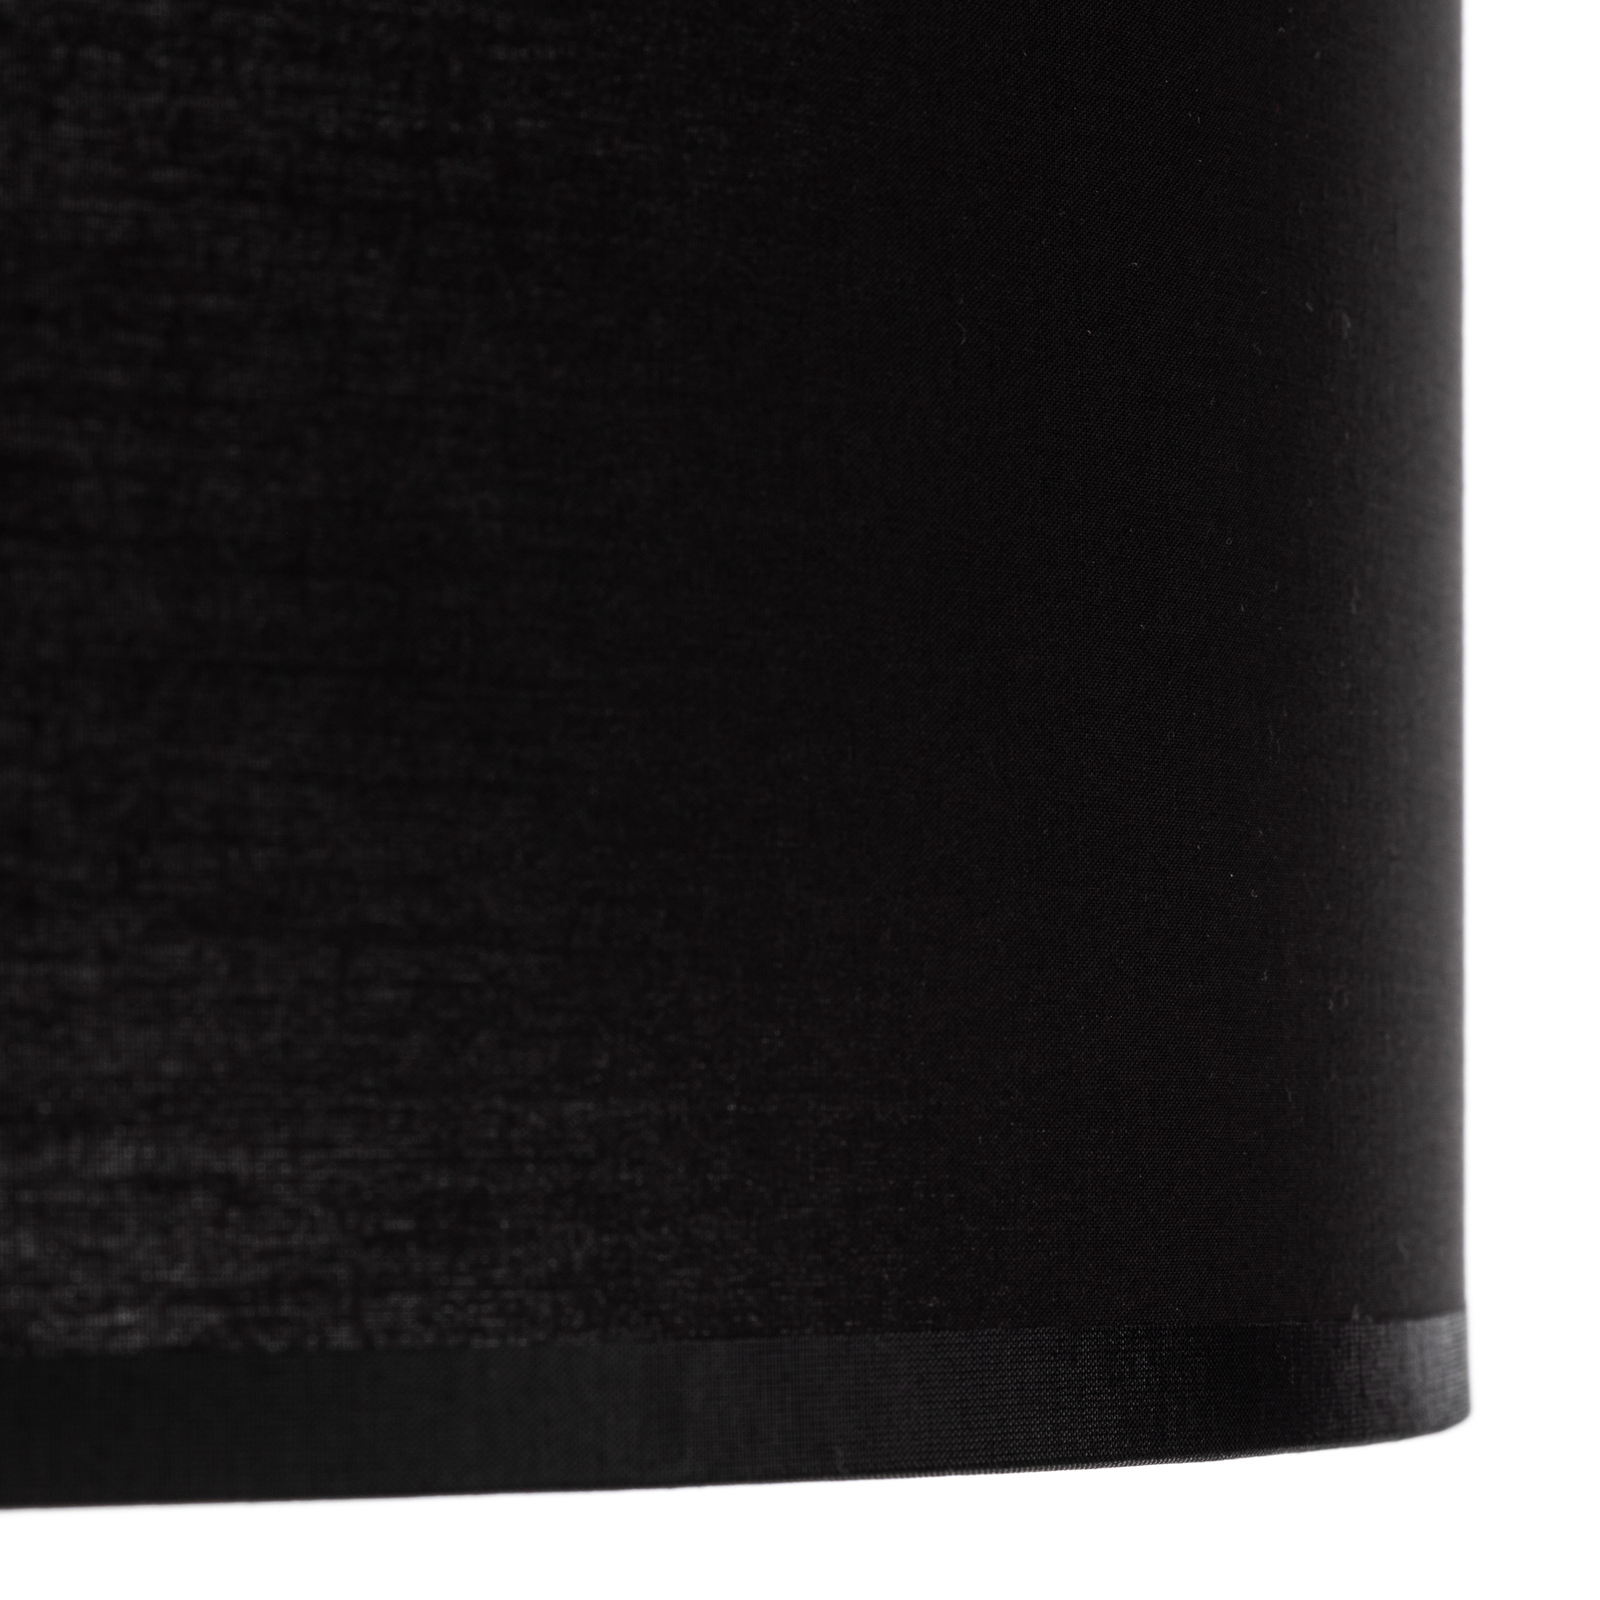 Fialové stropné svietidlo s dištančným rámčekom, čierne